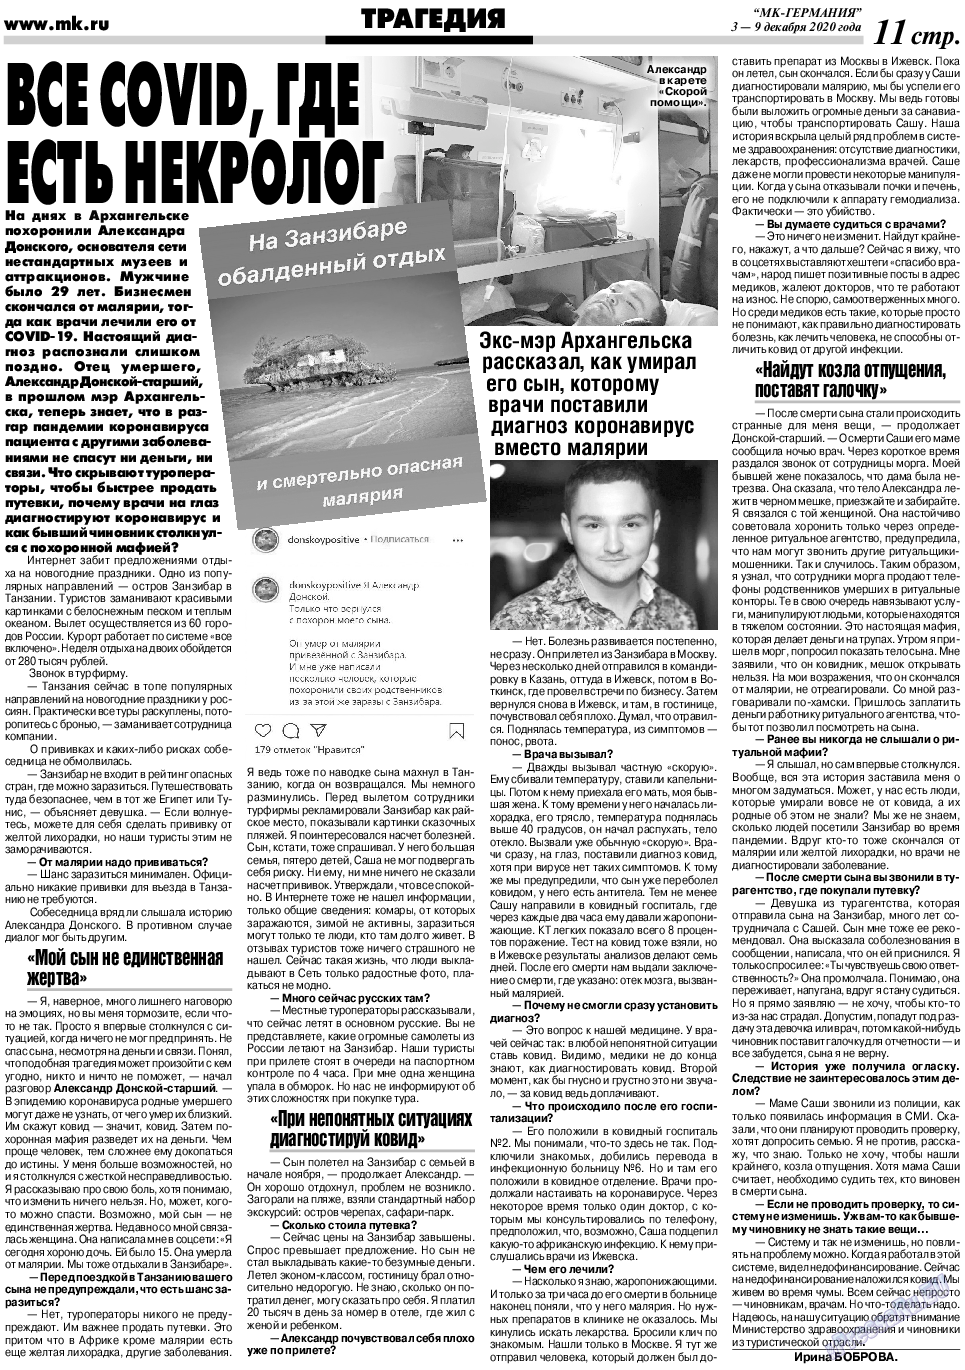 МК-Германия, газета. 2020 №49 стр.11